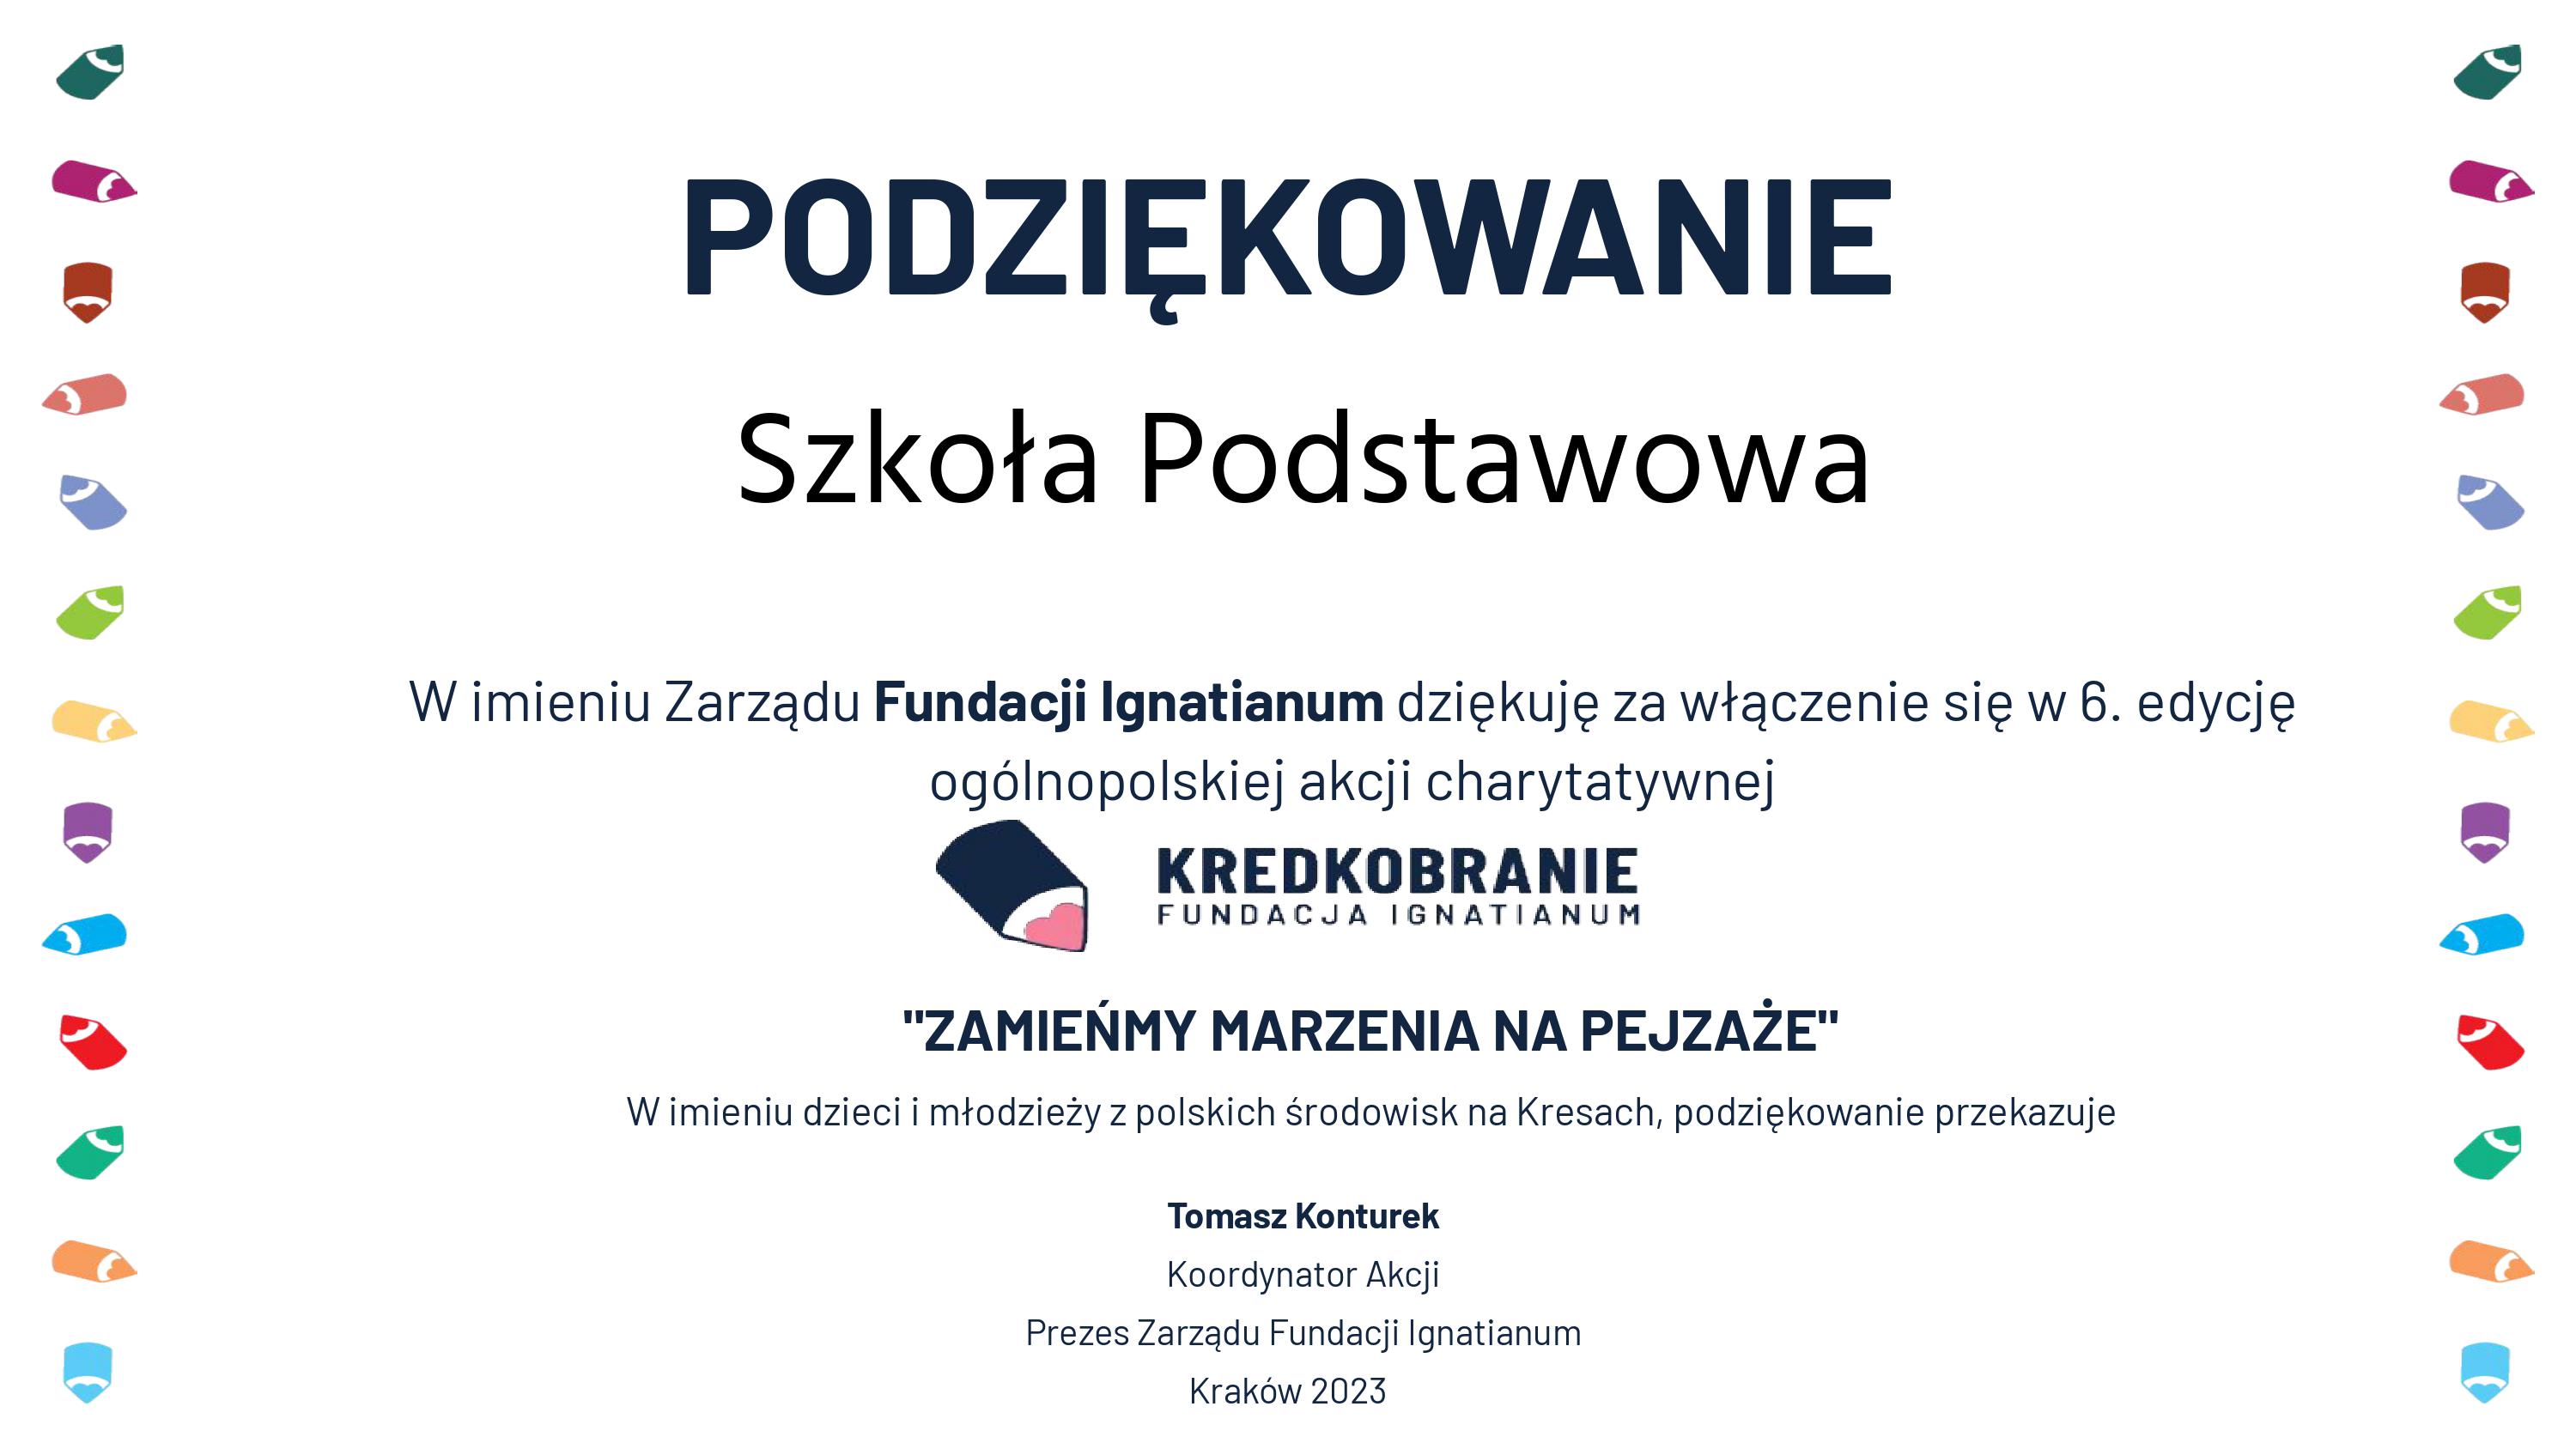 Szkoa Podstawowa-2023-10-02 10_30_58-1.jpg - 257.86 kb